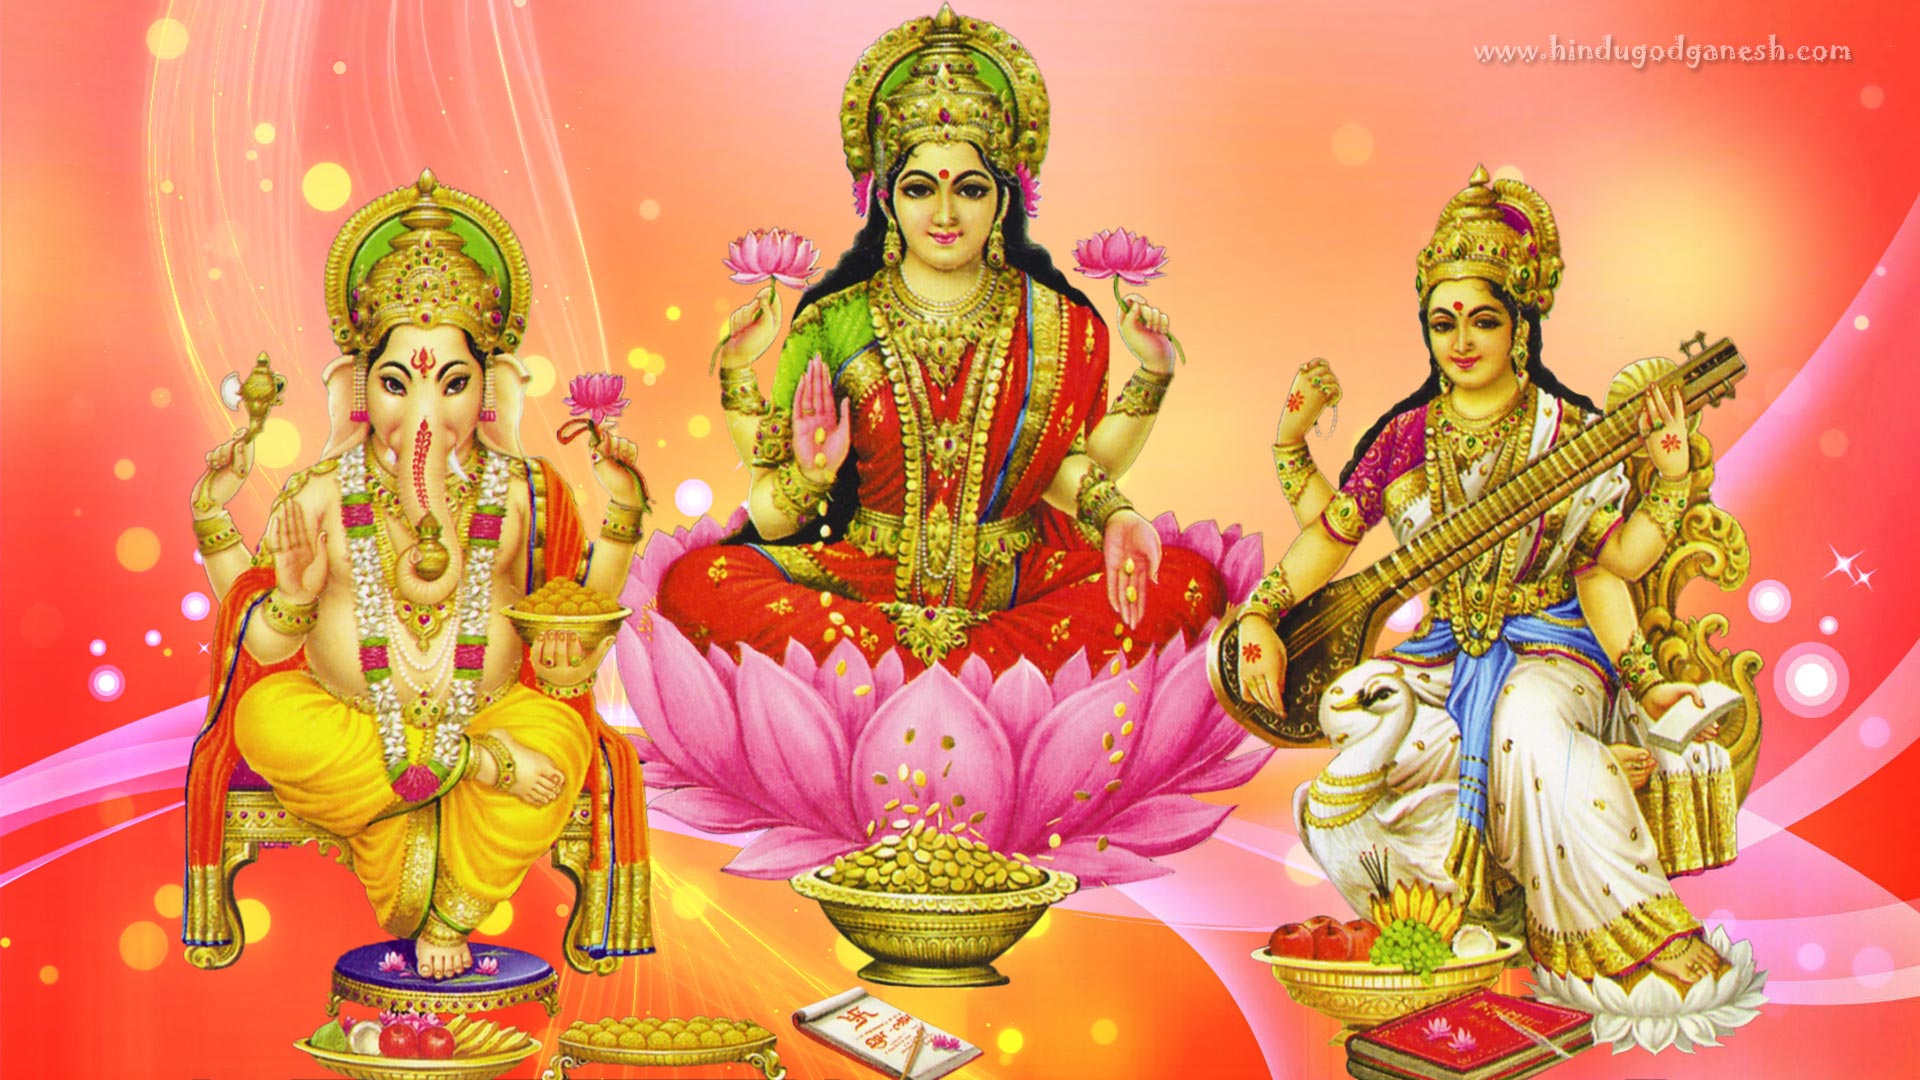 God lakshmi images full hd wallpaper for mobile desktop